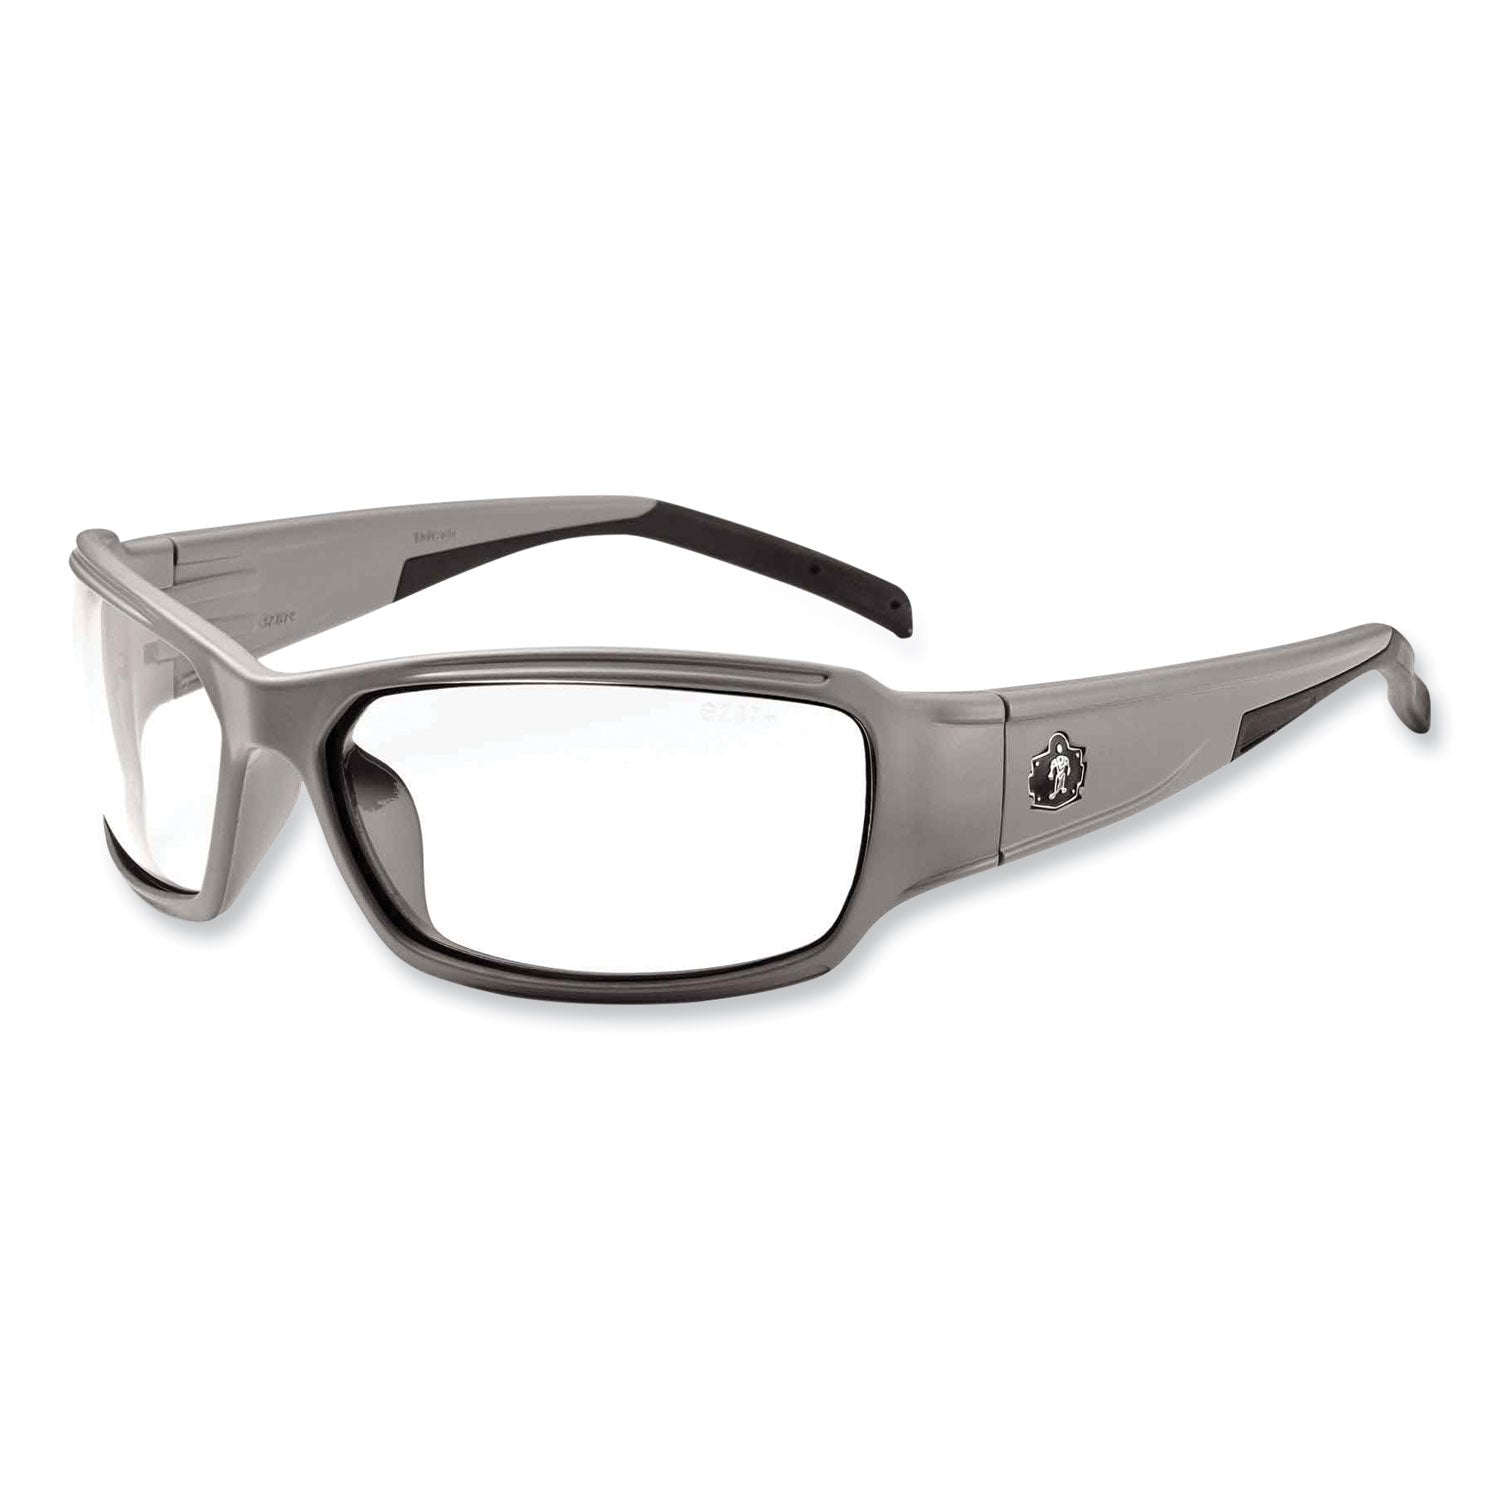 skullerz-thor-safety-glasses-matte-gray-nylon-impact-frame-anti-fog-clear-polycarbonate-lens-ships-in-1-3-business-days_ego51103 - 1